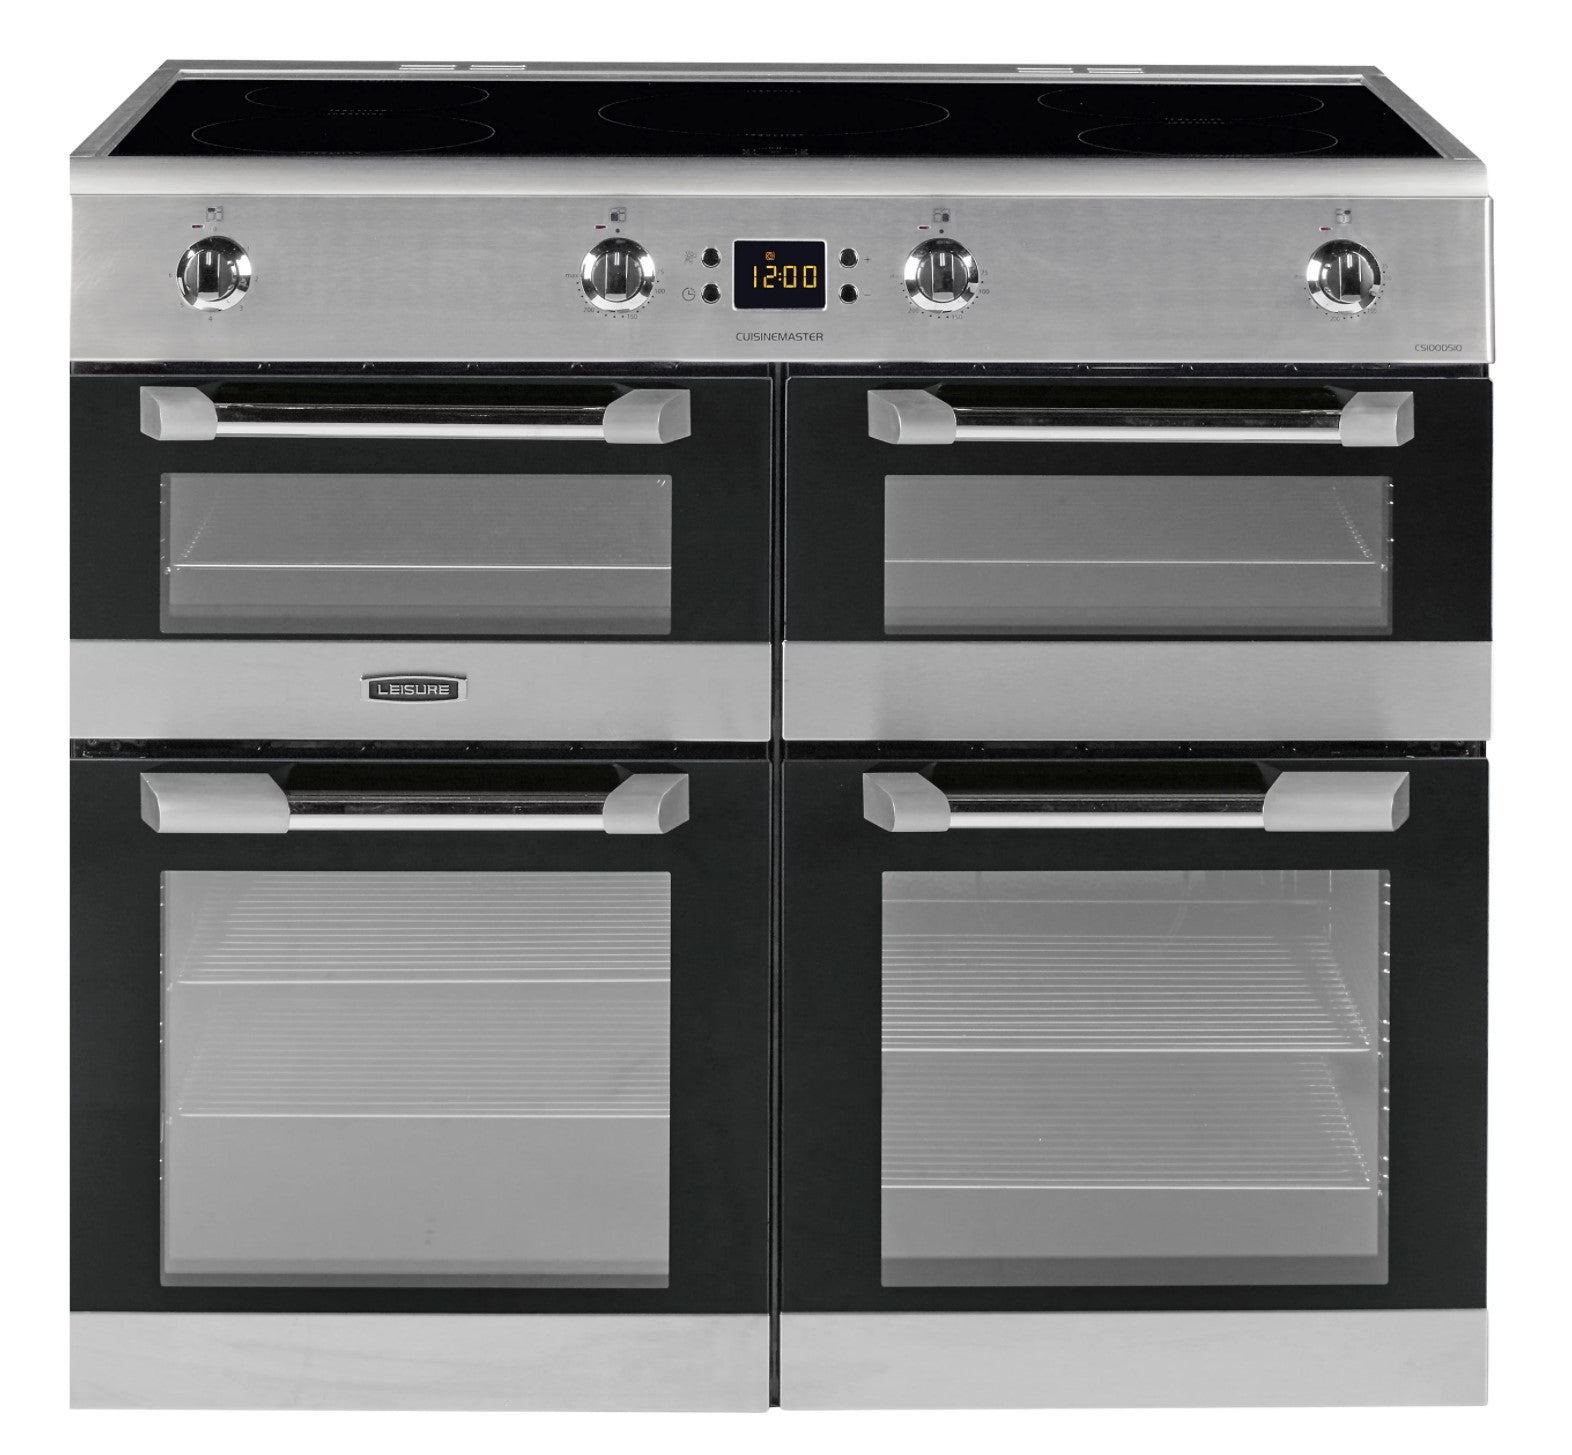 Leisure Cuisinemaster cooker-Induction Hob Freestanding  Silver-CS100D510X 6733